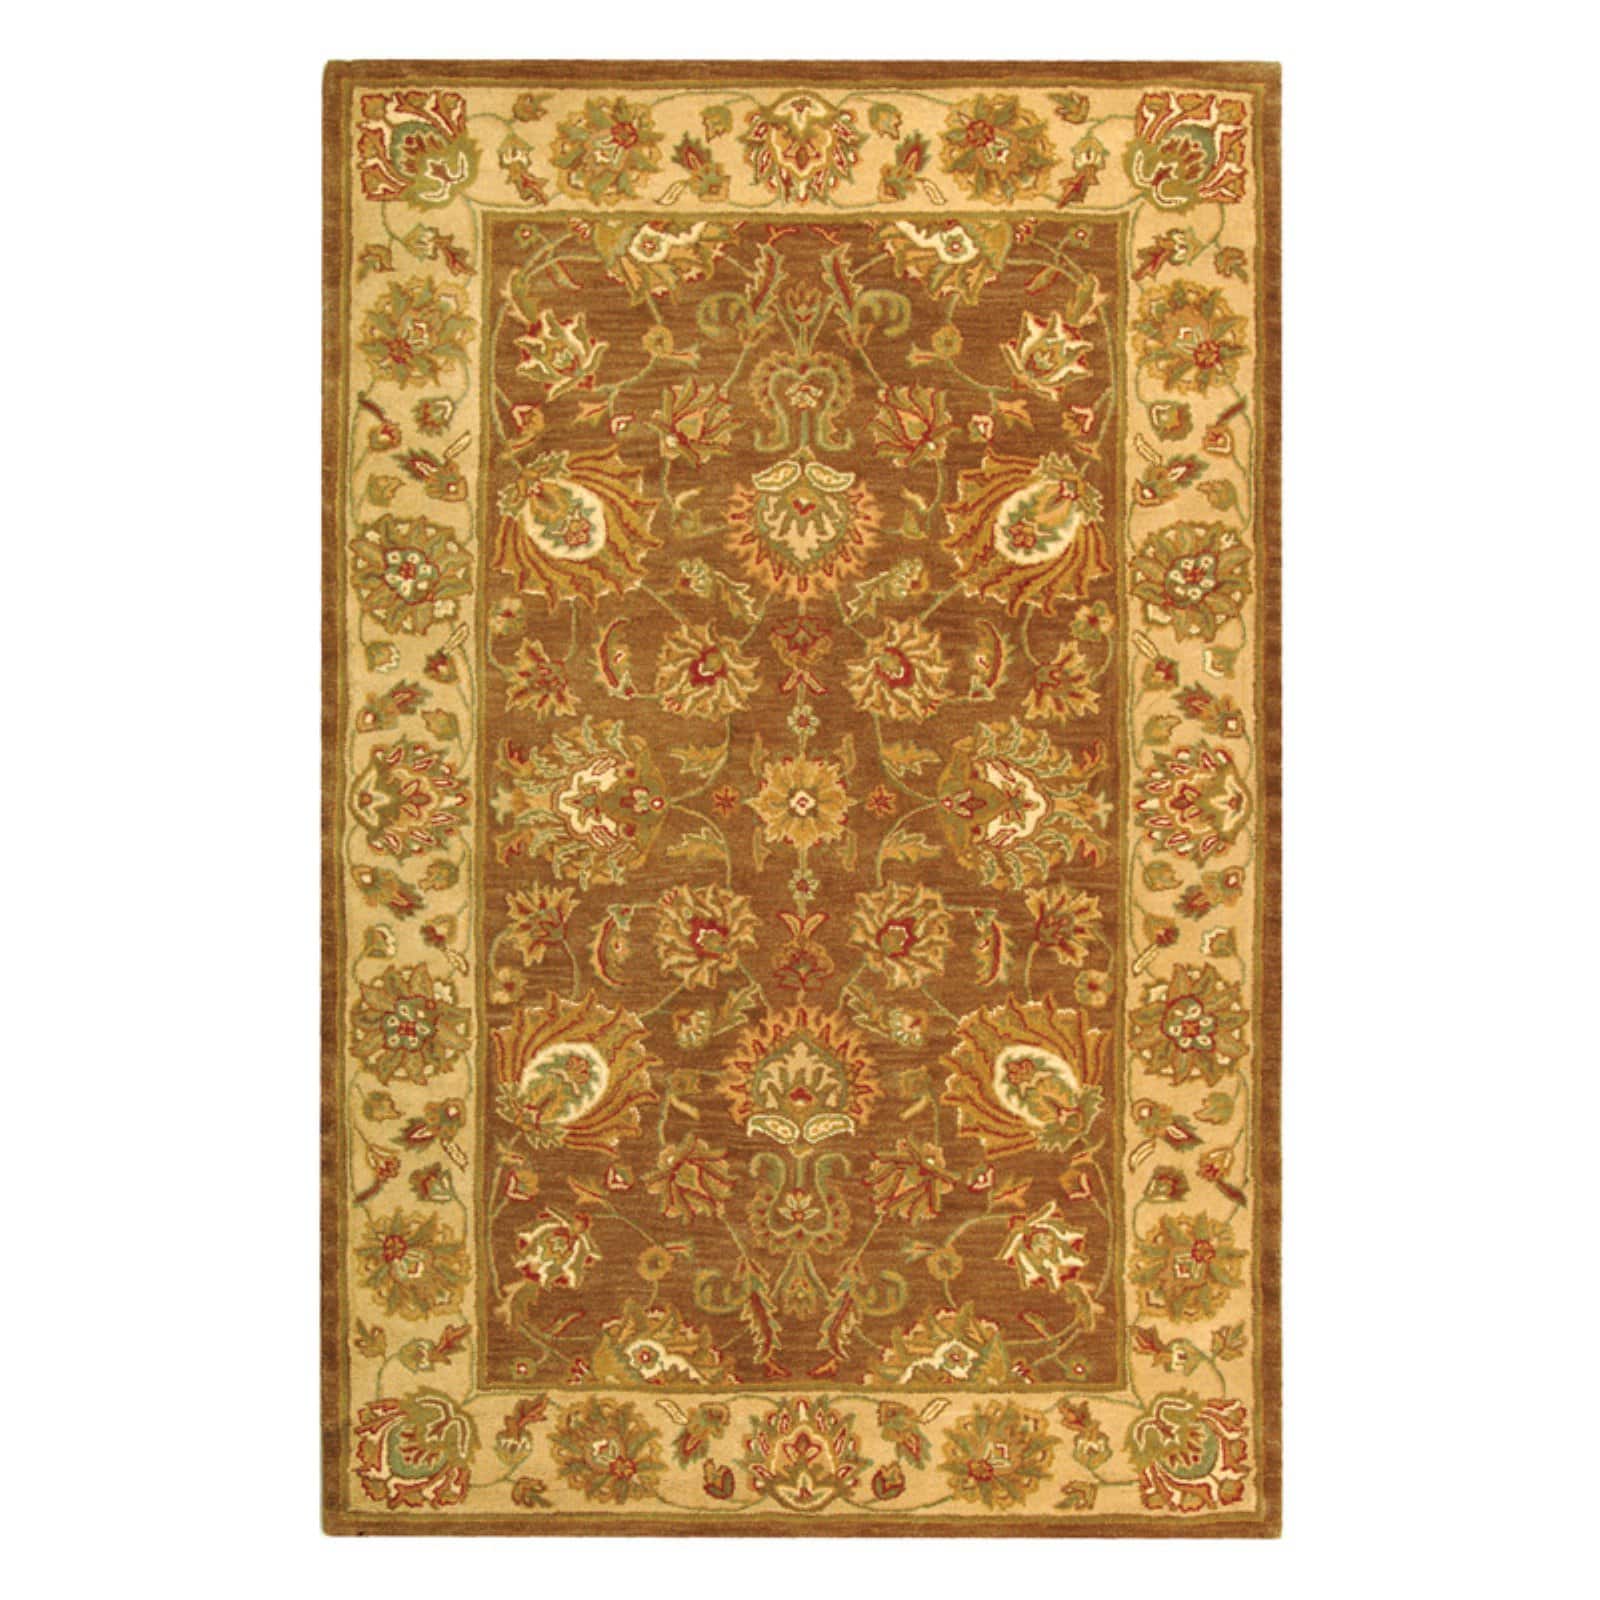 SAFAVIEH Heritage Regis Traditional Wool Area Rug, Brown/Ivory, 4'6" x 6'6" Oval - image 4 of 9